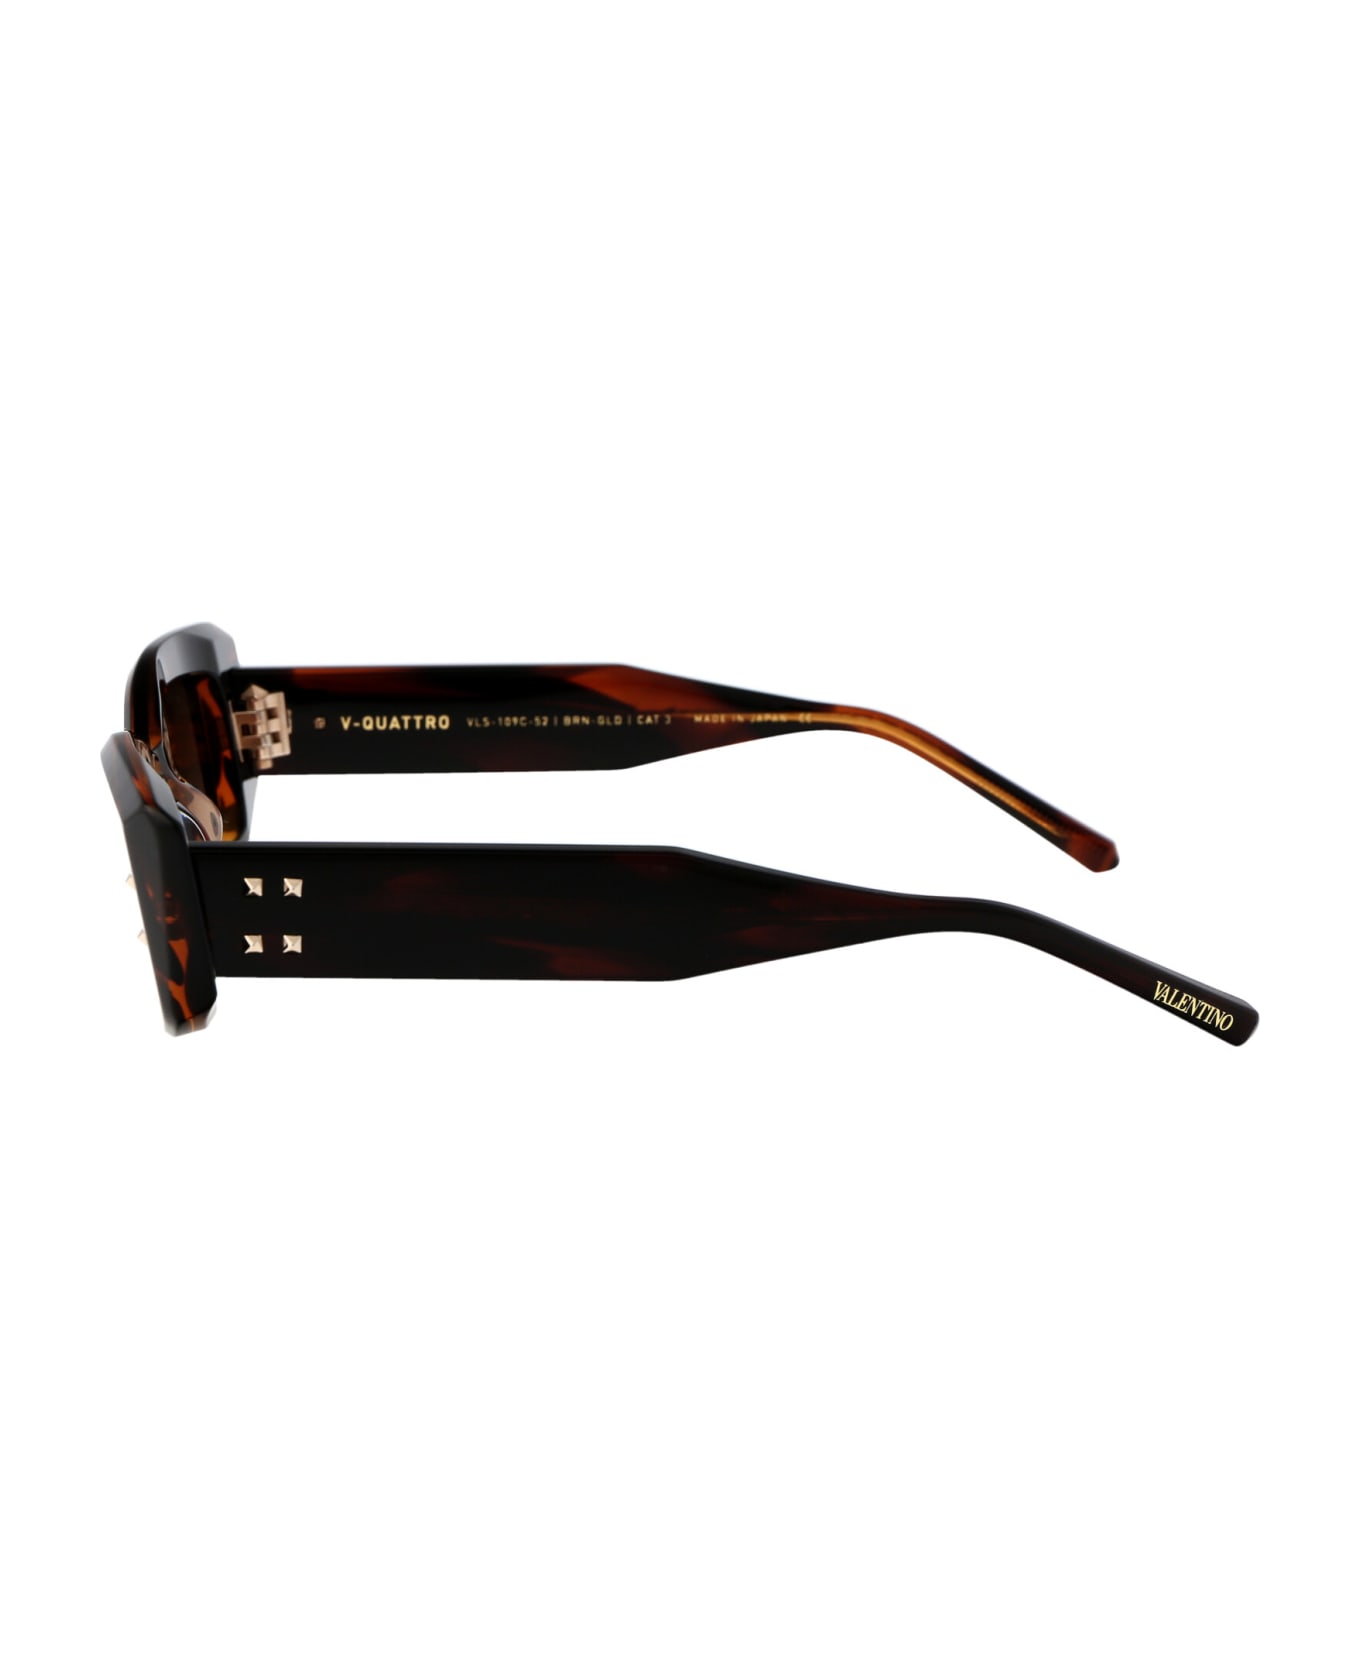 Valentino Eyewear V - Quattro Sunglasses - 109C BRN - GLD  サングラス